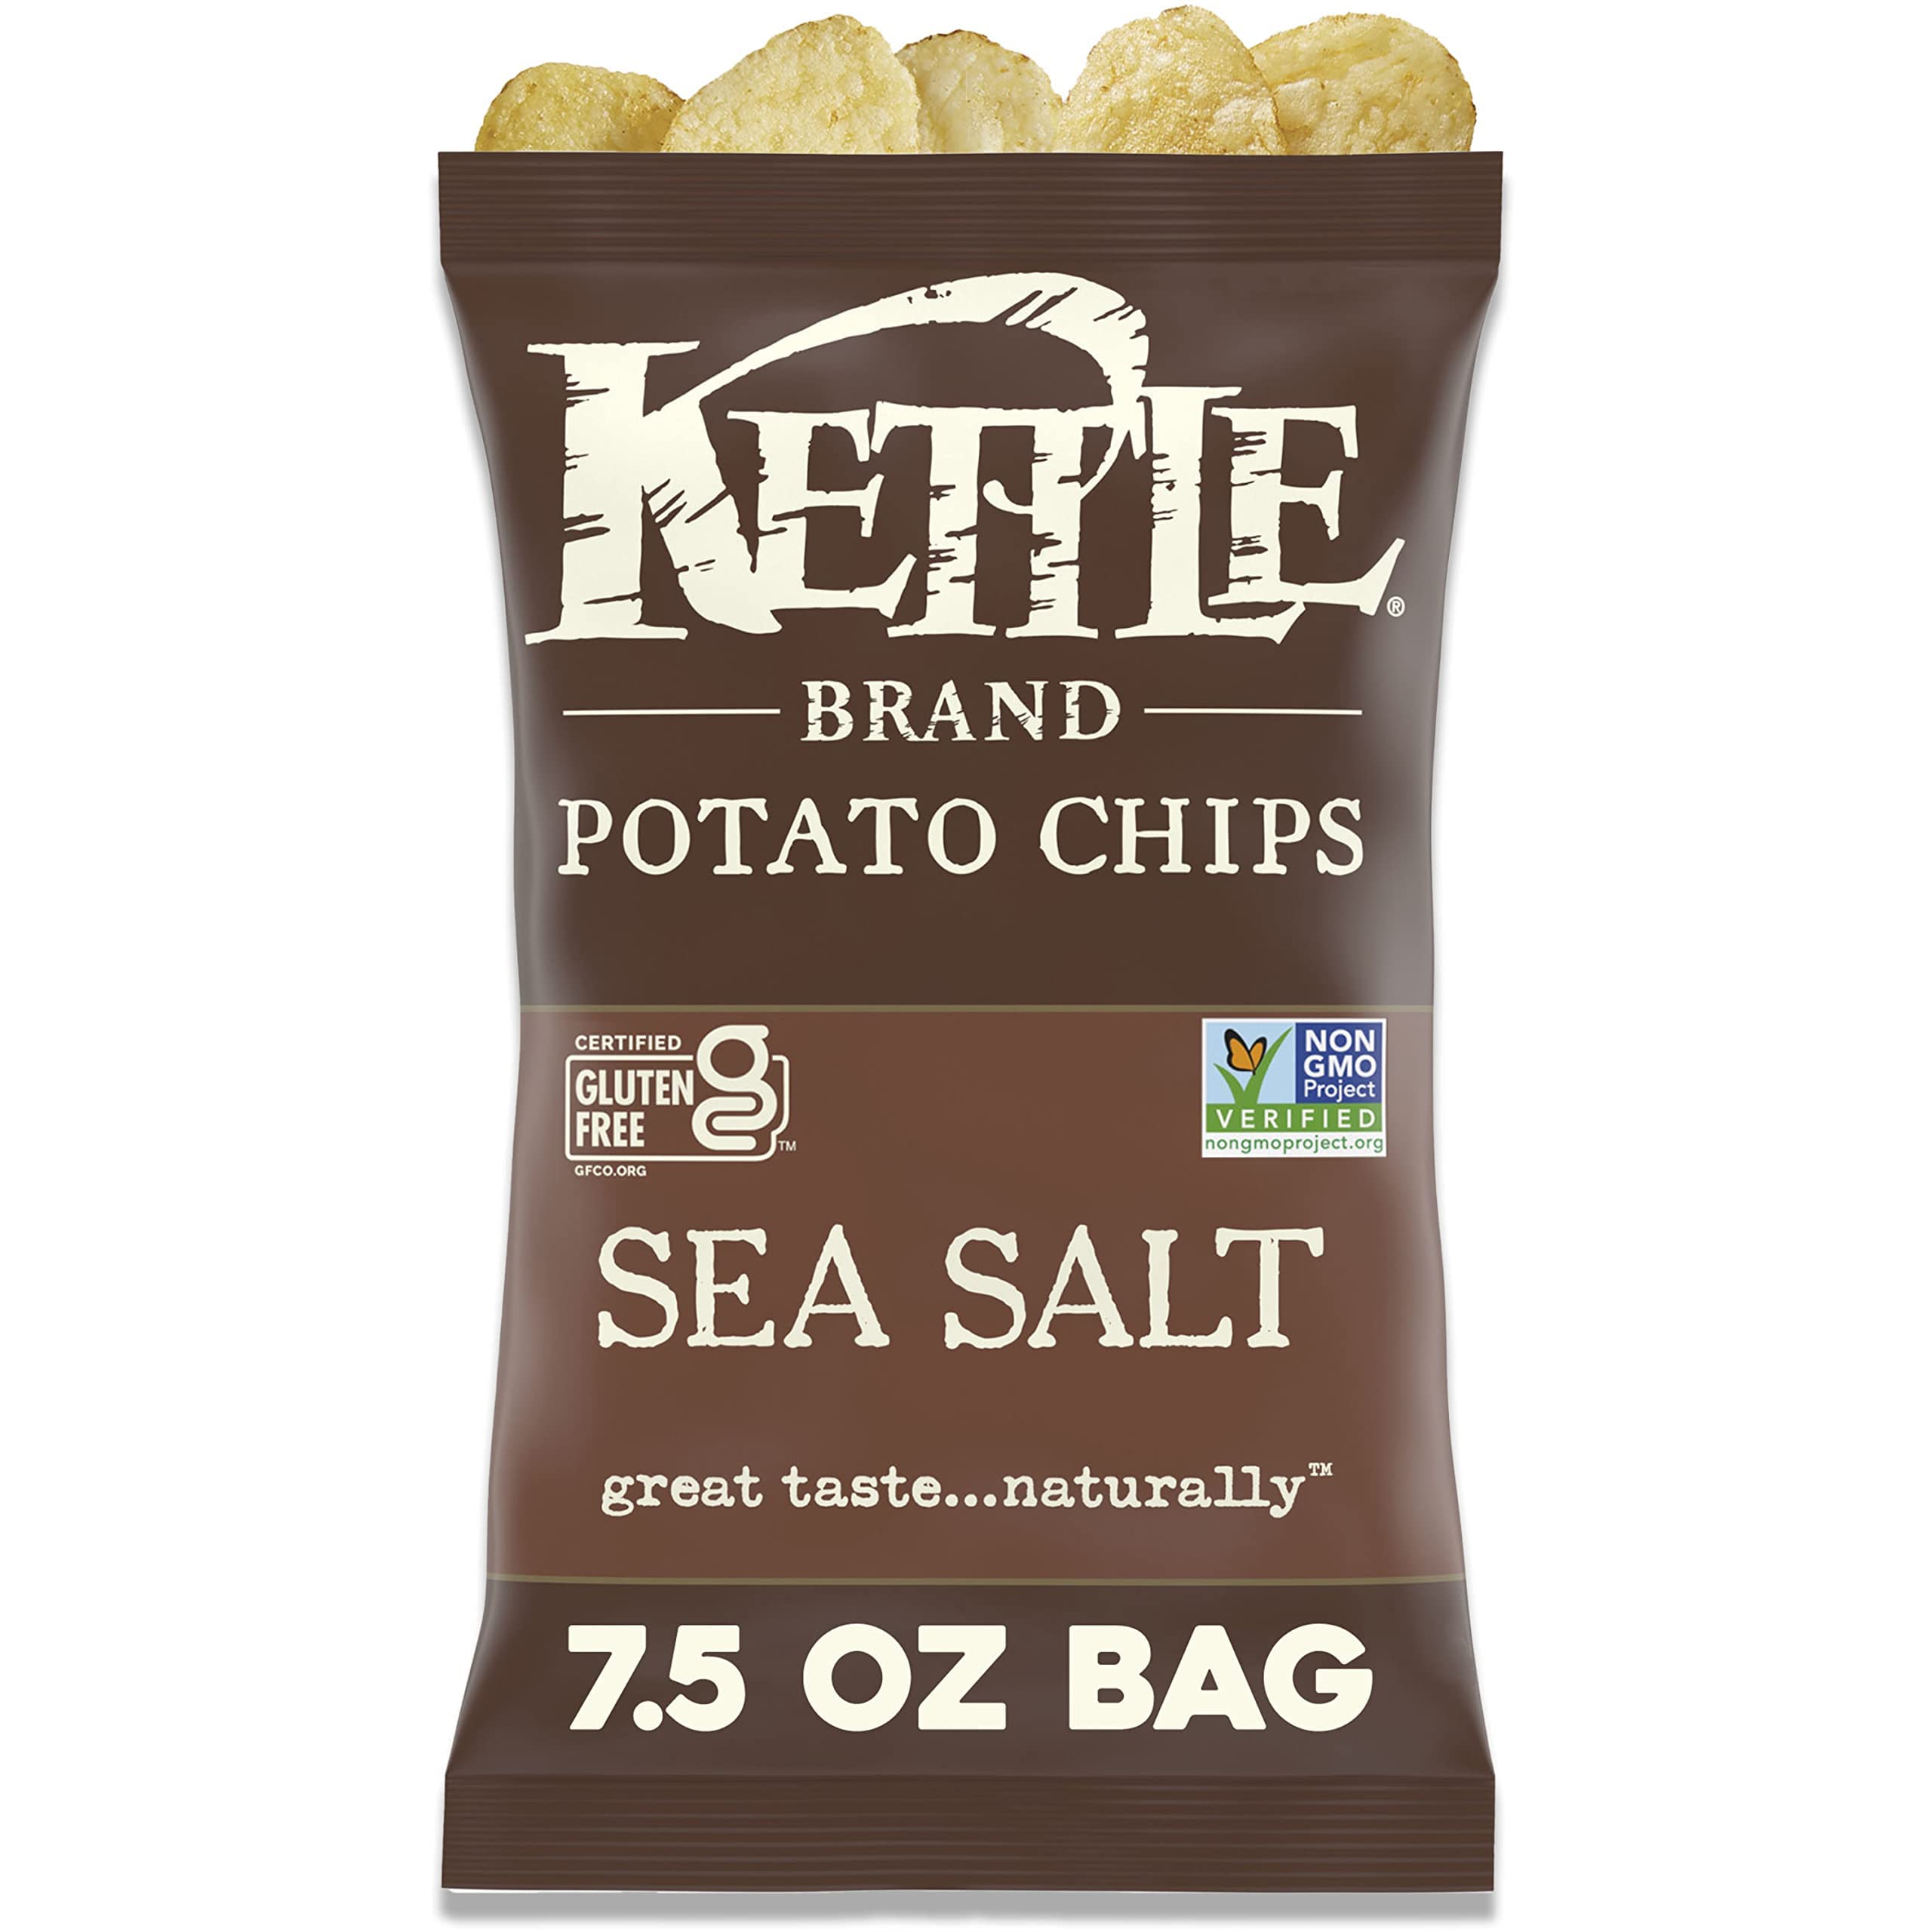 7.5-Oz Kettle Brand Krinkle Cut Kettle Potato Chips (Sea Salt) $2.37 w/ S&S + Free Shipping w/ Prime or $35+